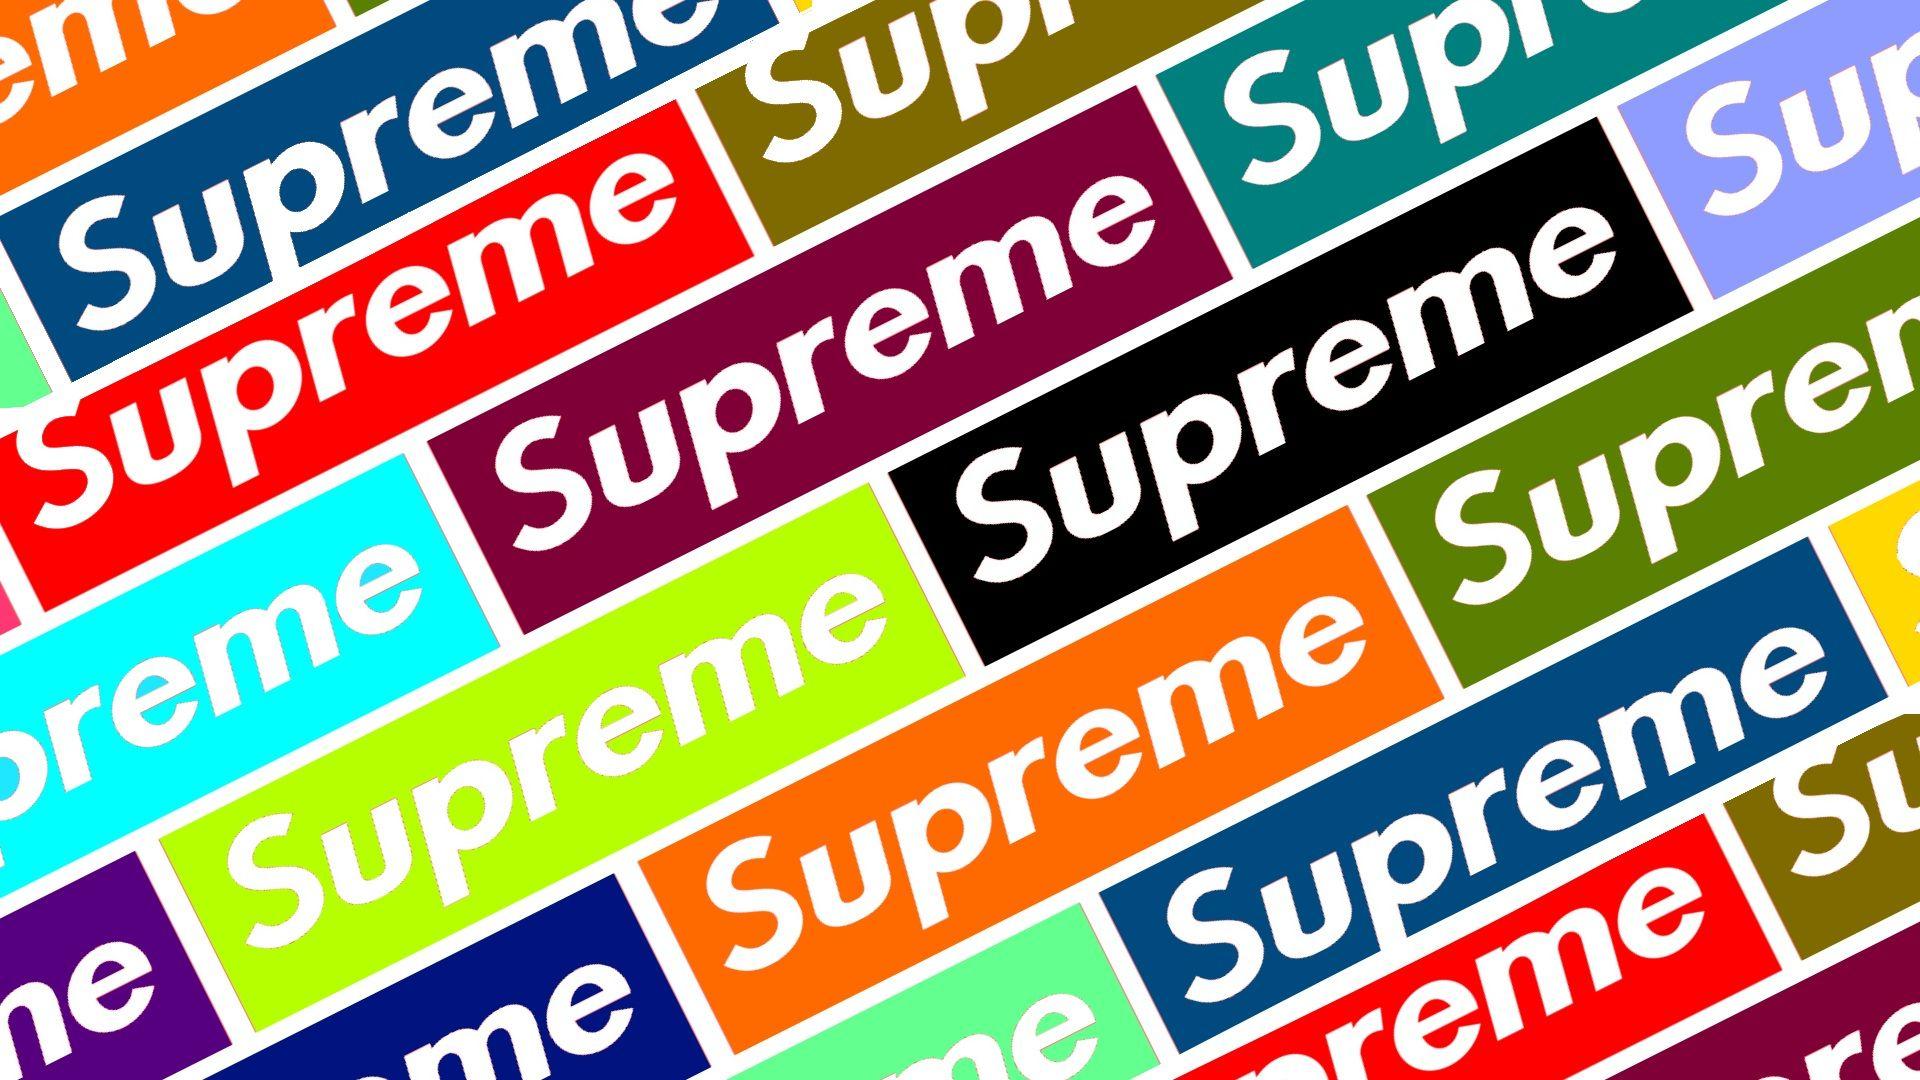 Sypreme Logo Blue Wallpapers on WallpaperDog